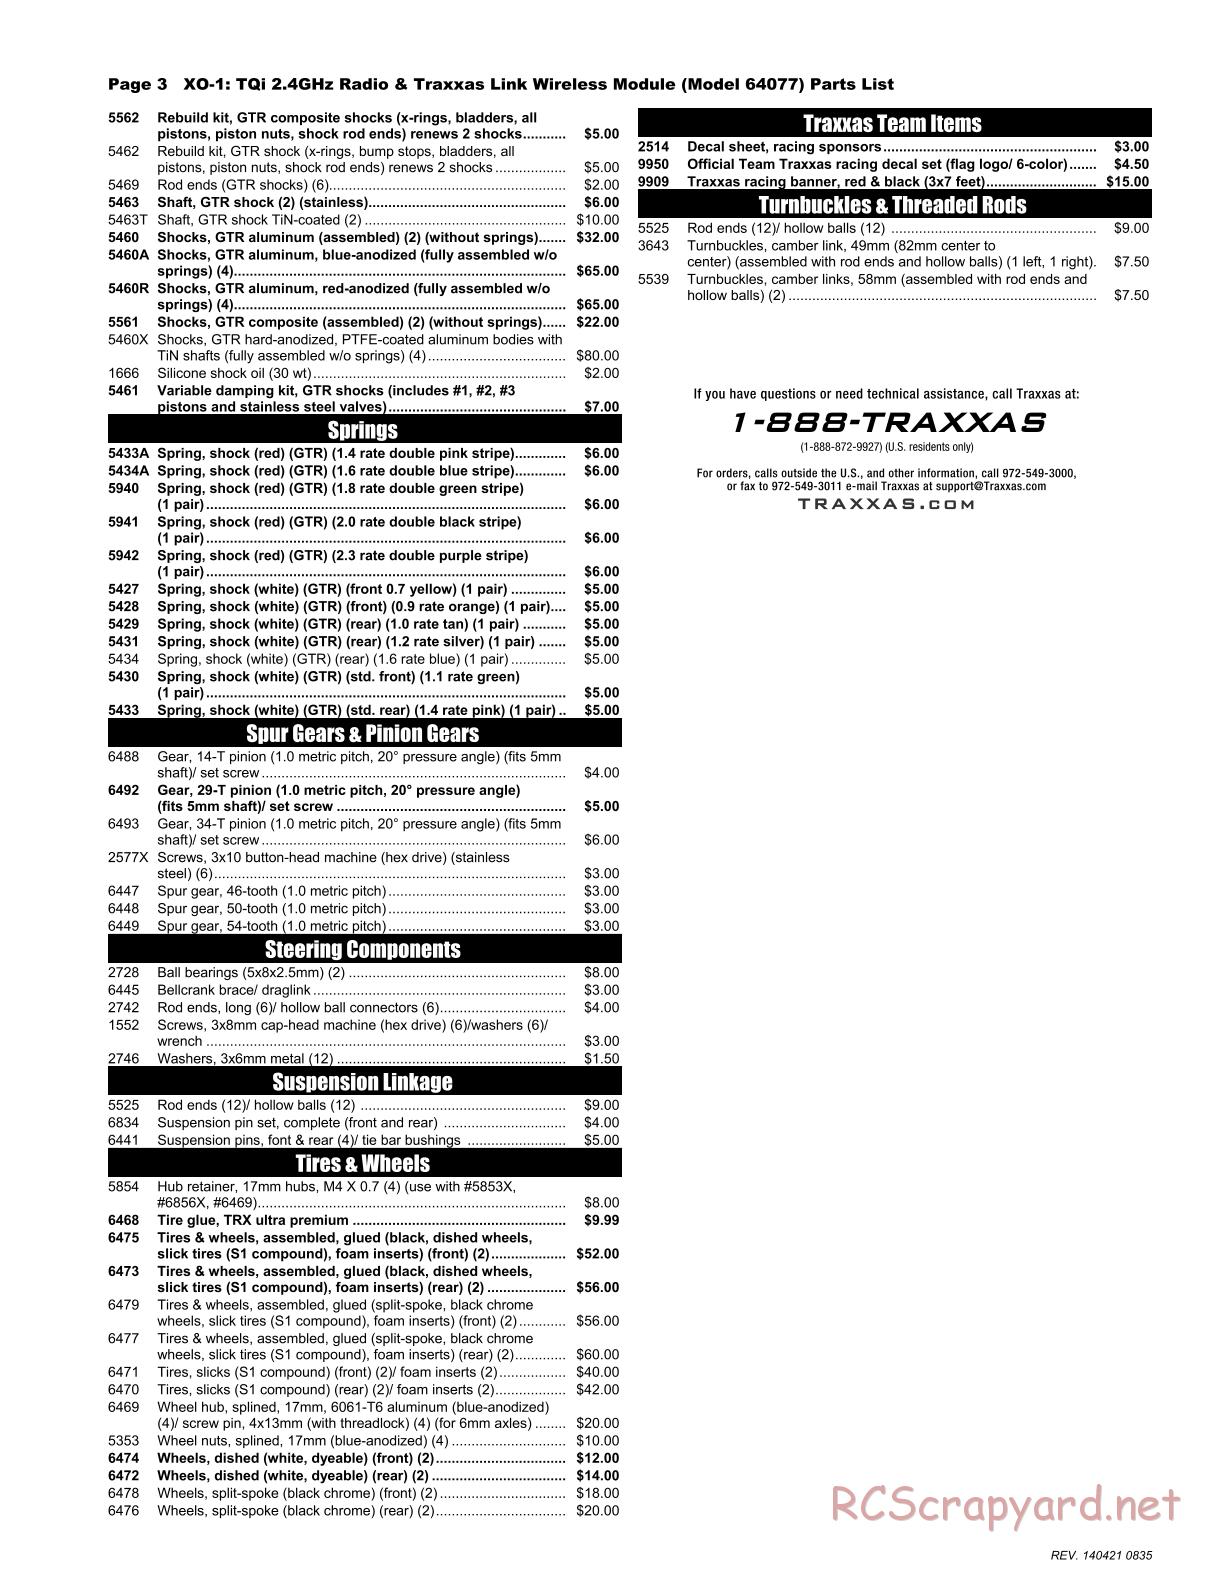 Traxxas - XO-1 (2014) - Parts List - Page 3